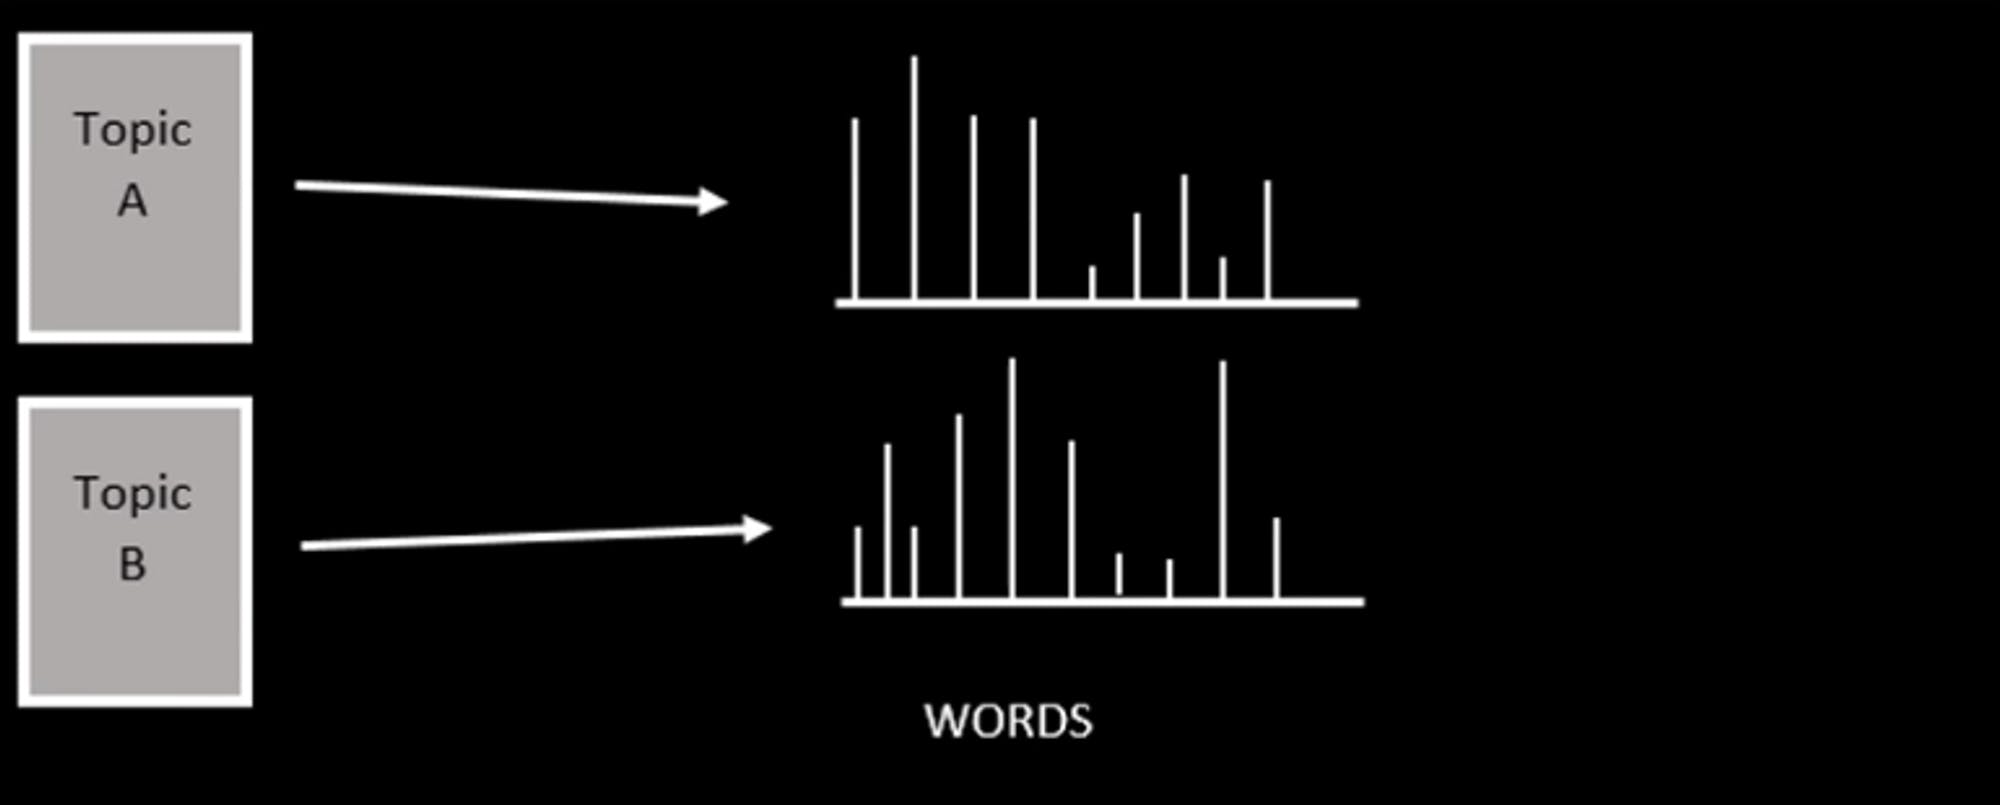 LDA Algorithm Description for words.